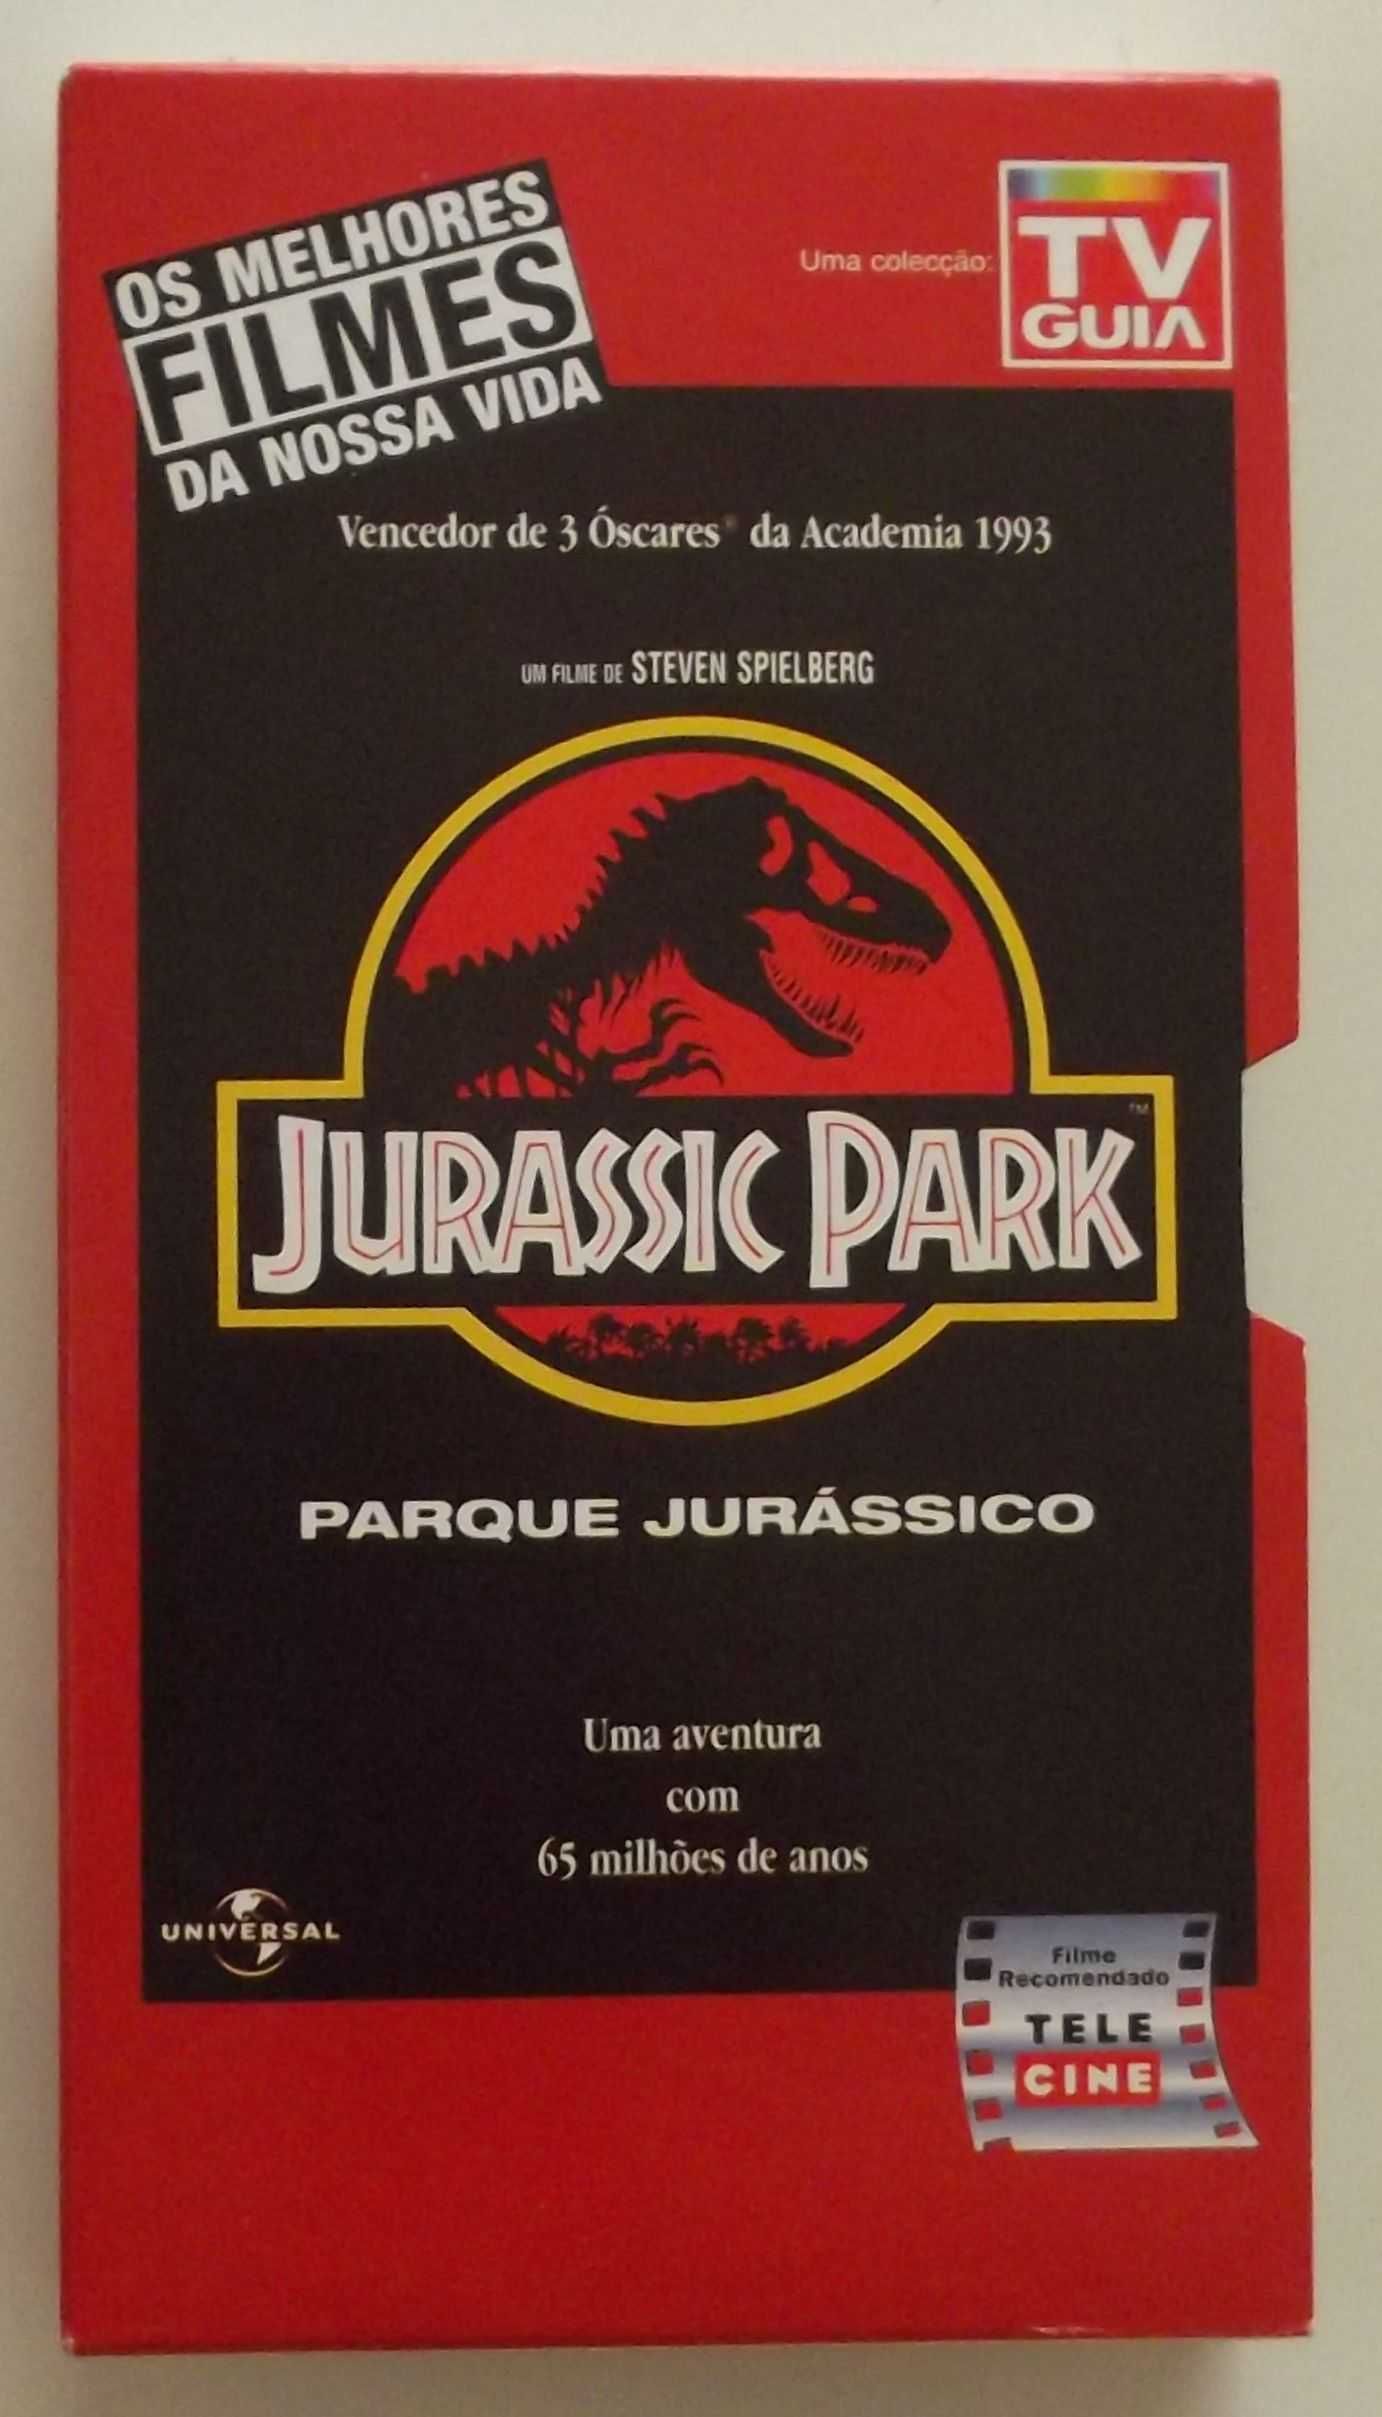 Filme em VHS Jurassic Park